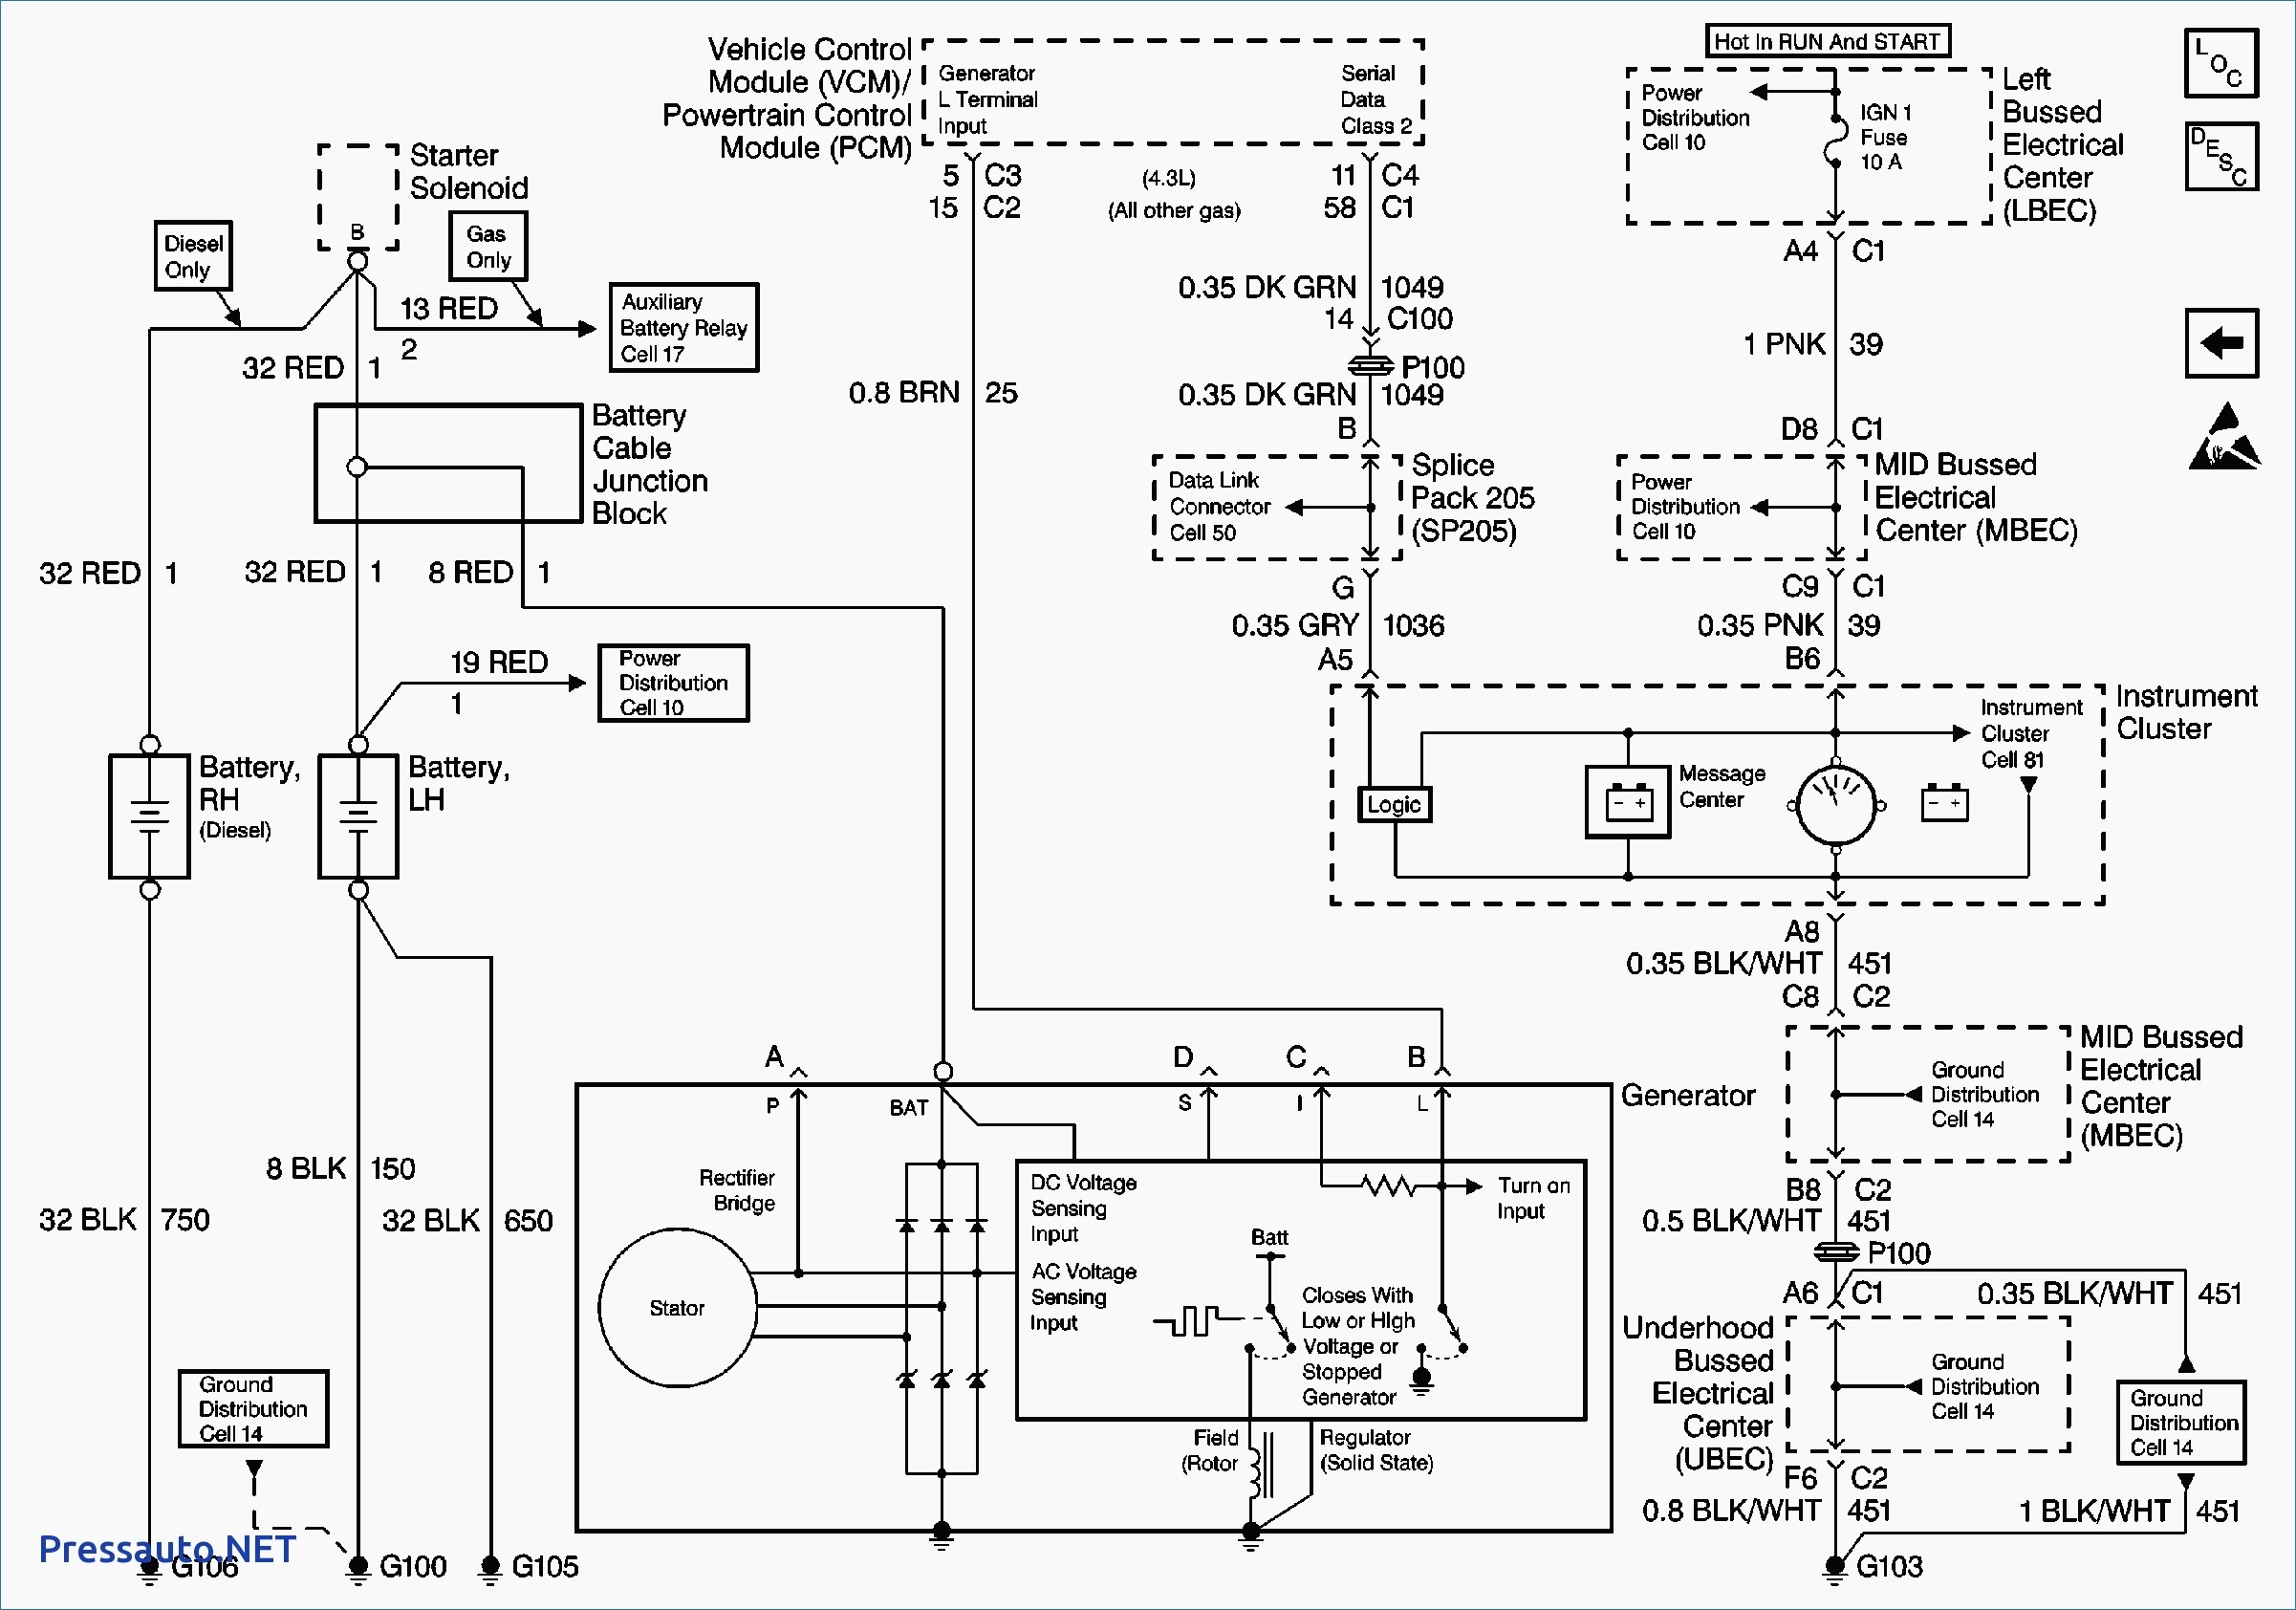 Wiring Diagram For Gmc Sierra Z71 2000 1999 Gif Fit U003d2402 2C1684 U0026ssl U003d1 240Sx